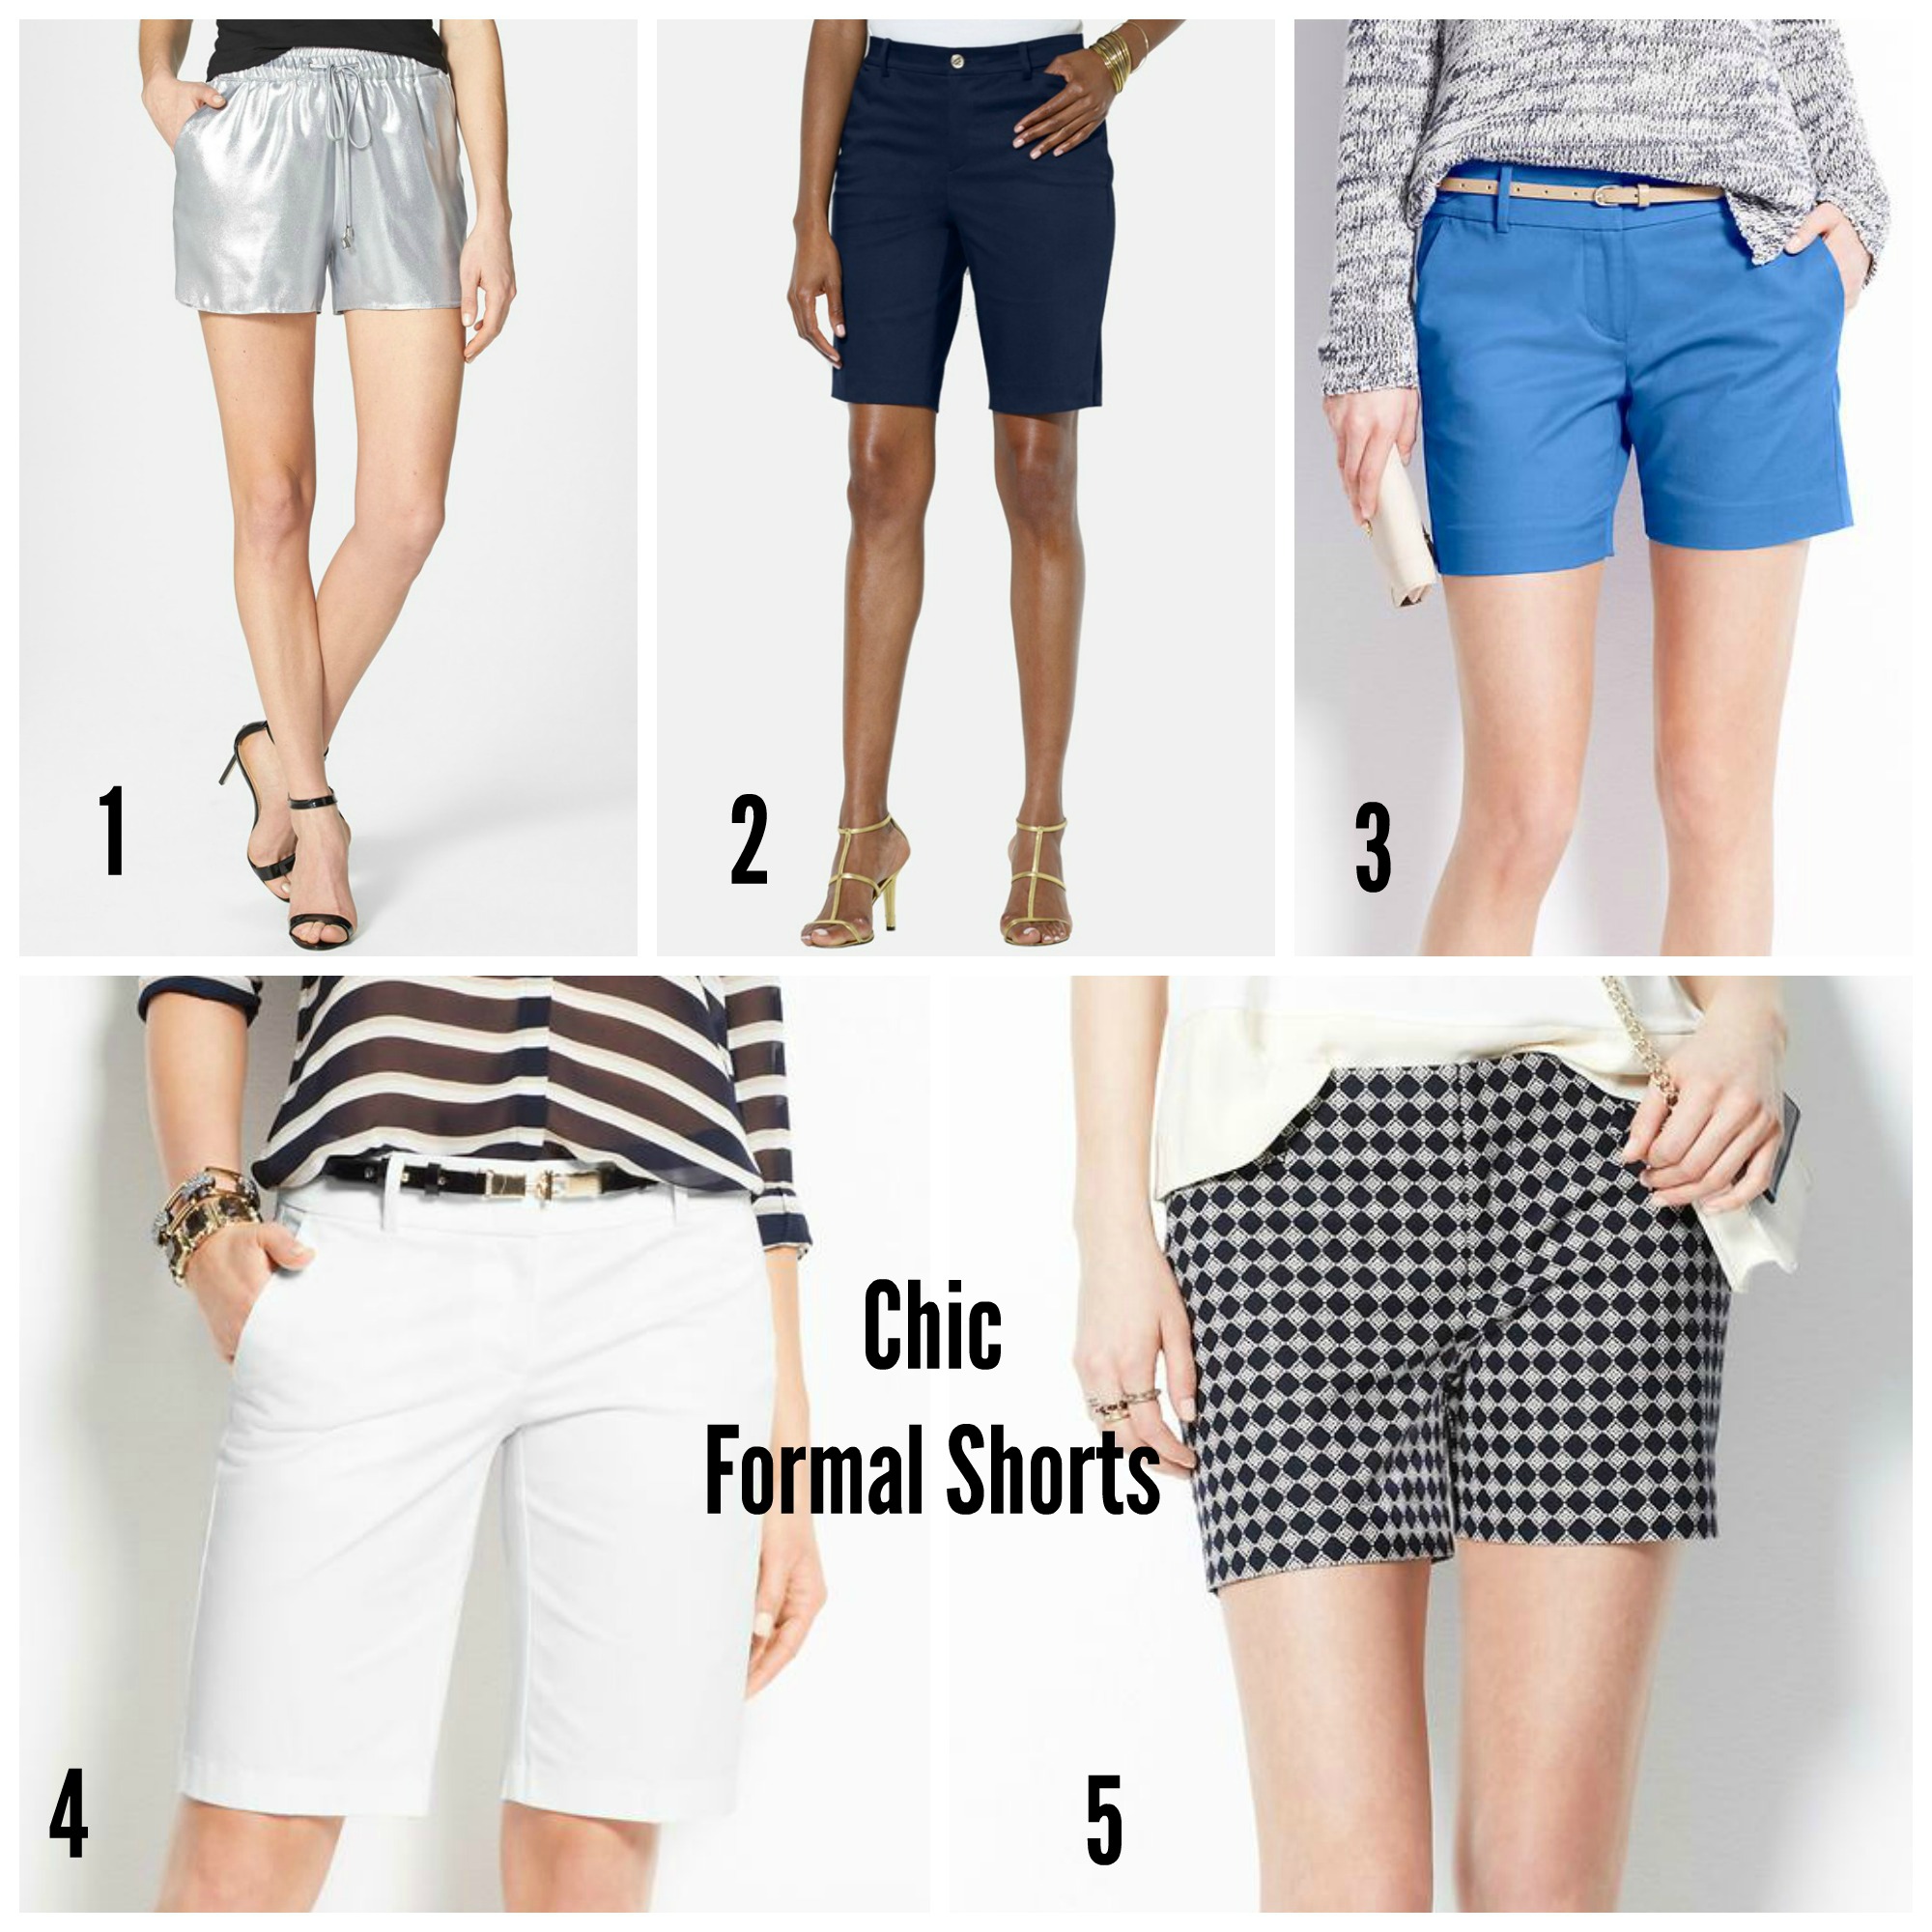 Chic Formal Shorts